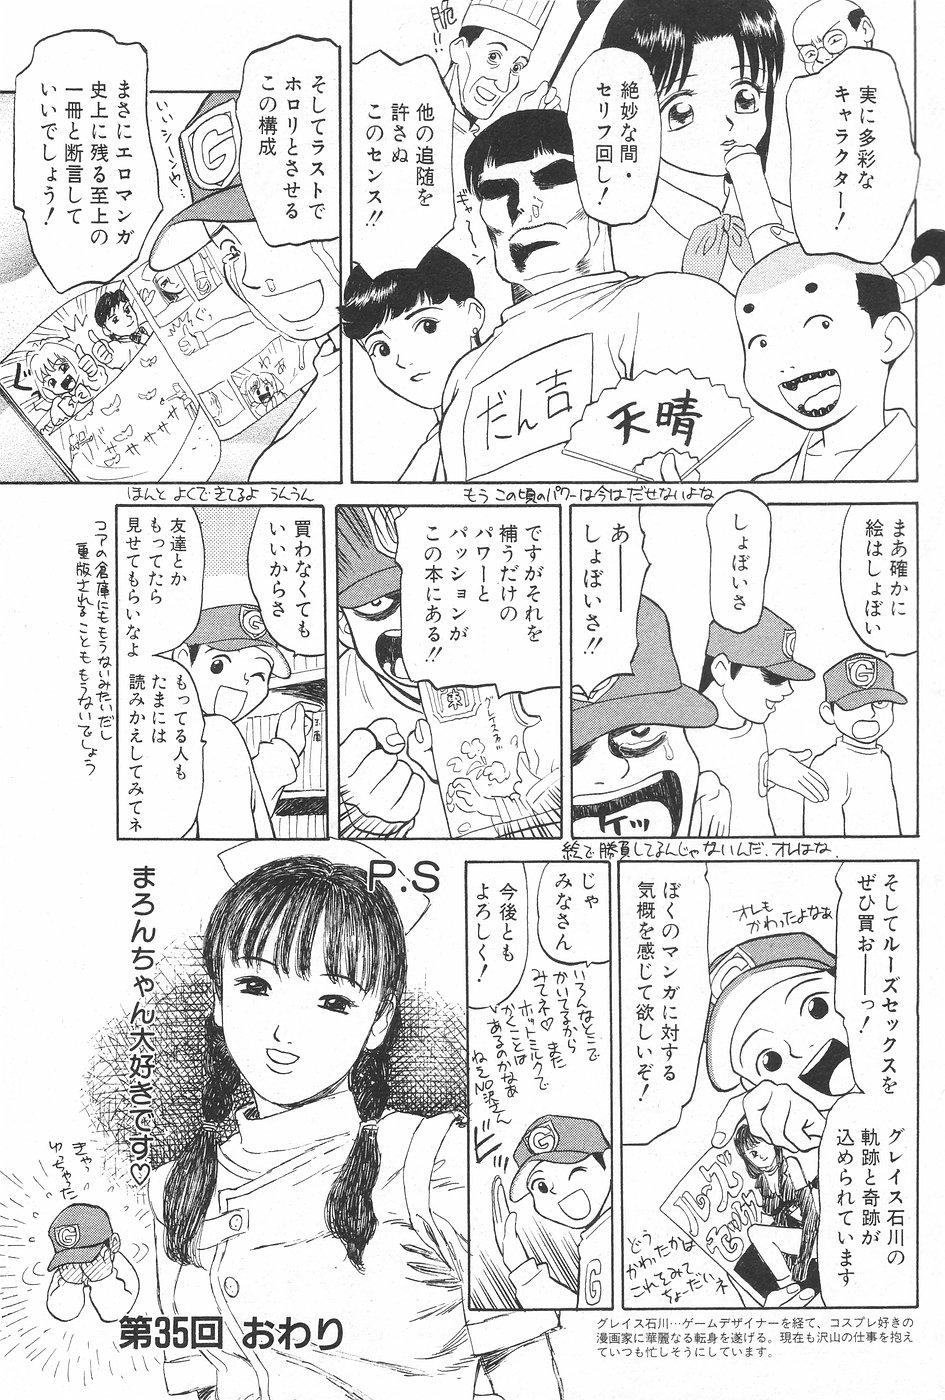 Manga Hotmilk 1997-05 168